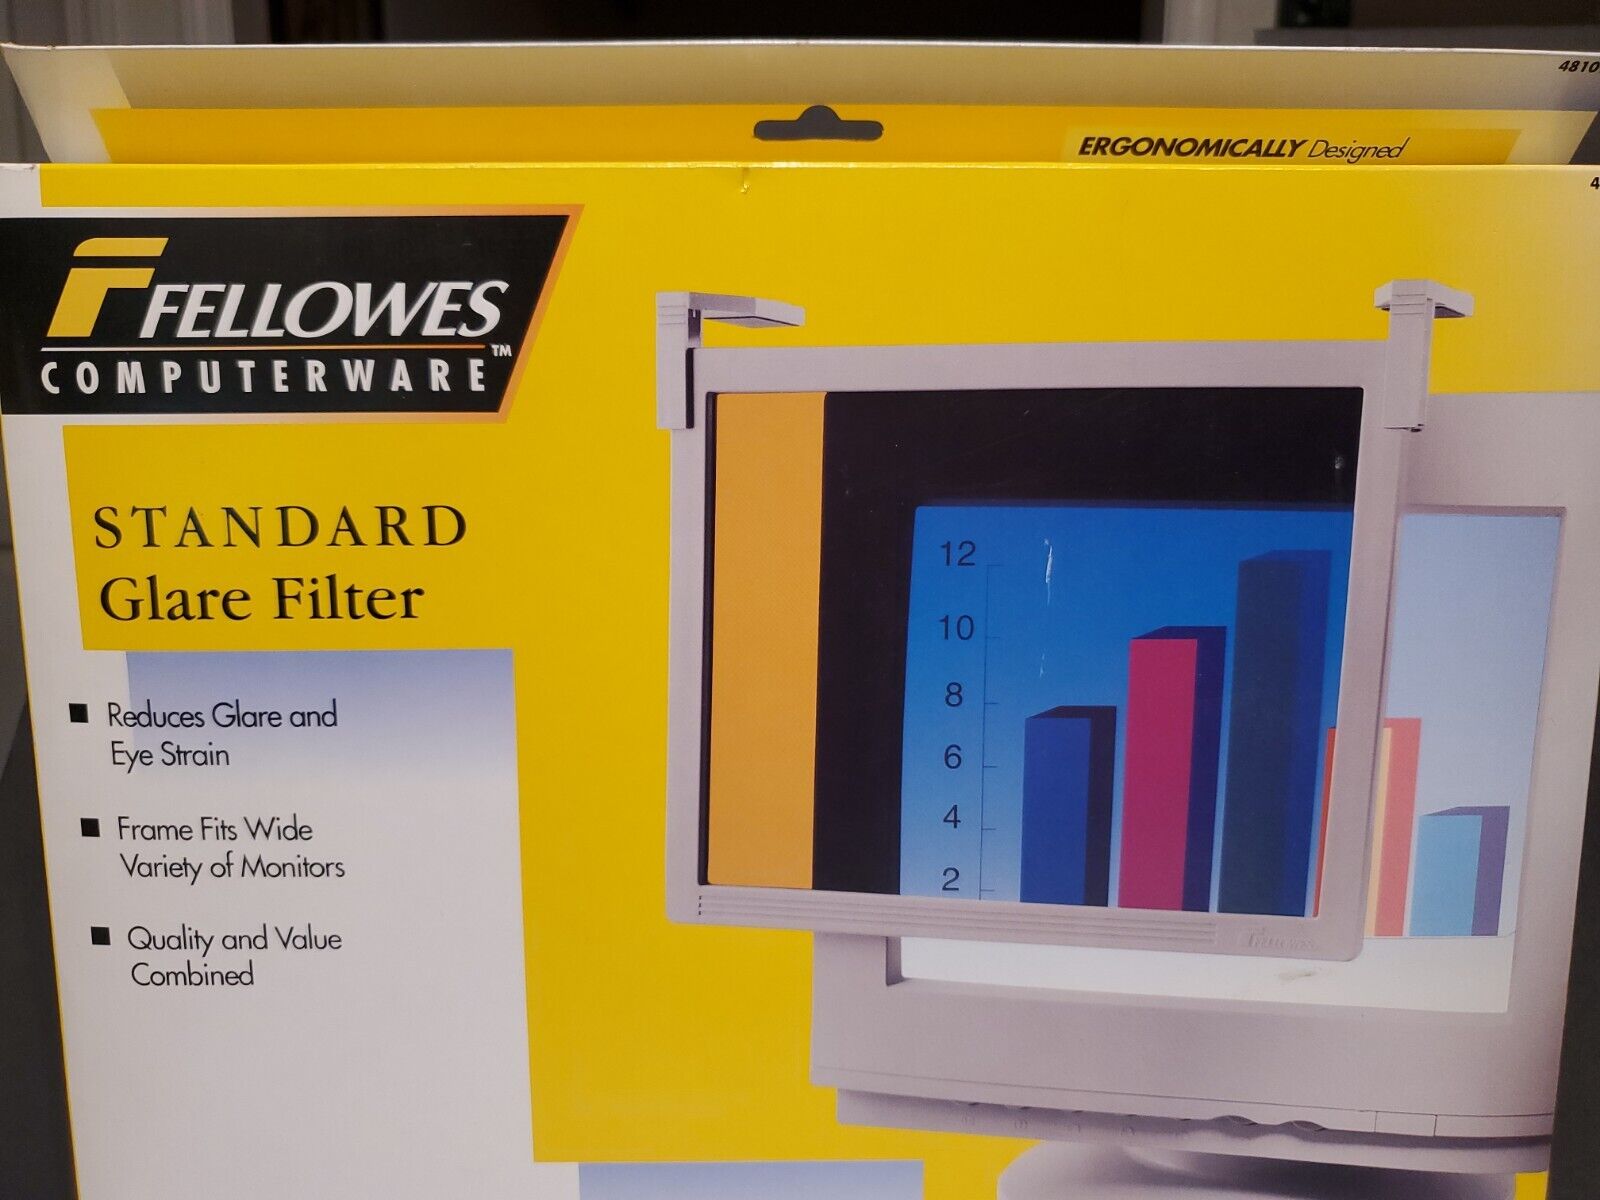 Fellowes Computerware Standard Glare Filter-Reduces Eye Strain- Ergonomic Design